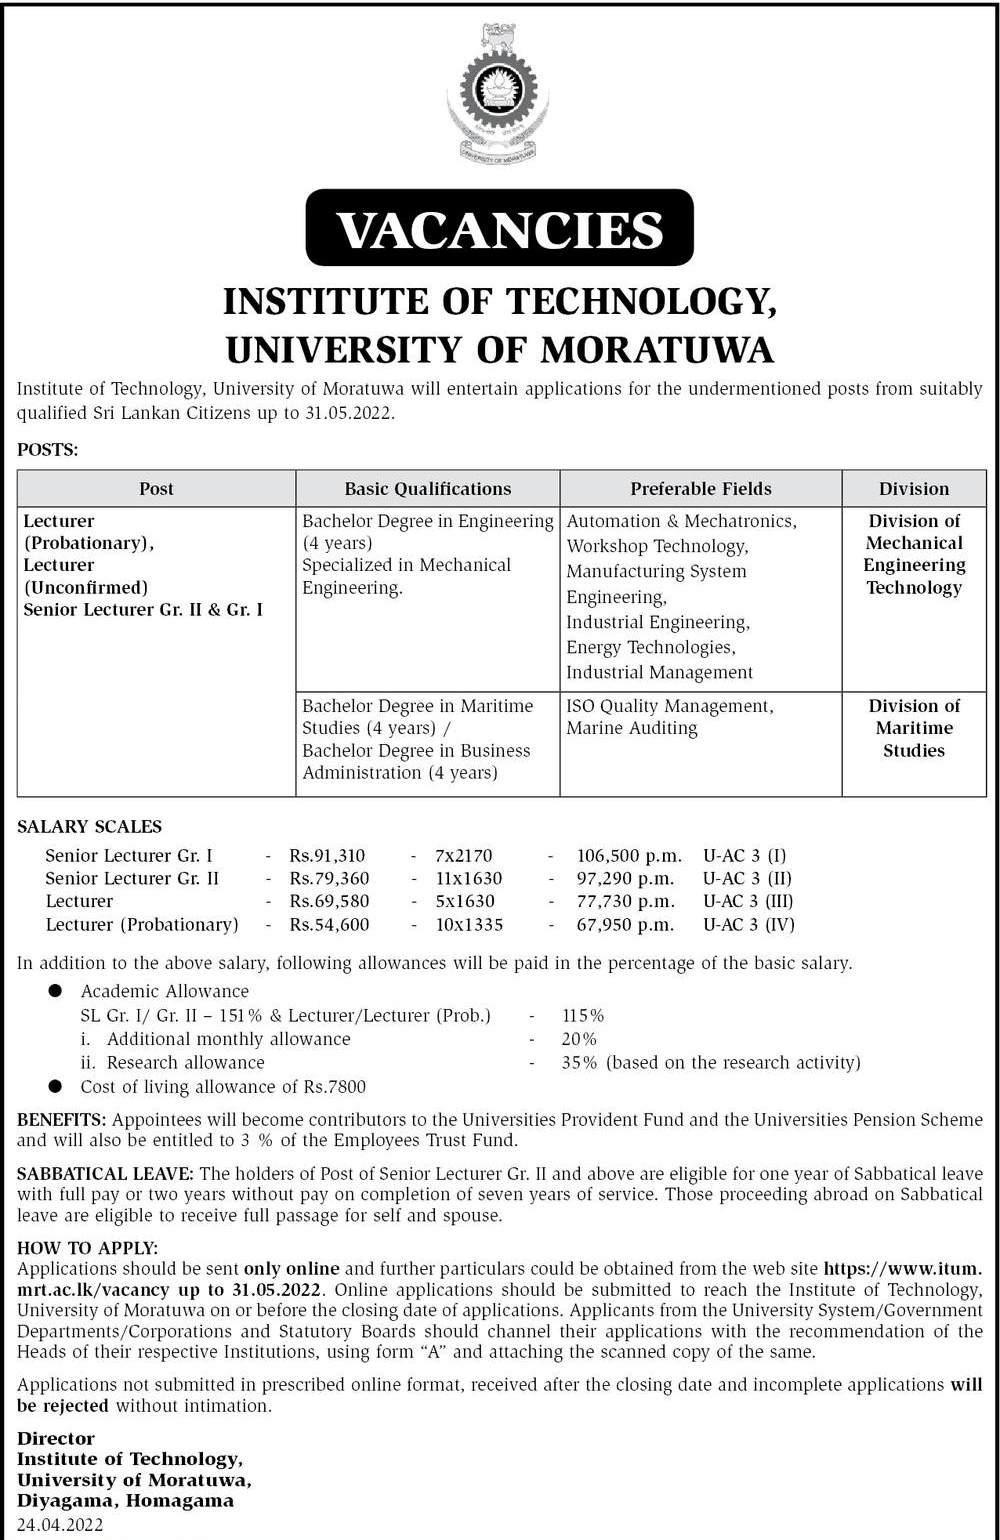 University of Moratuwa Institute of Technology Lecturers Vacancies